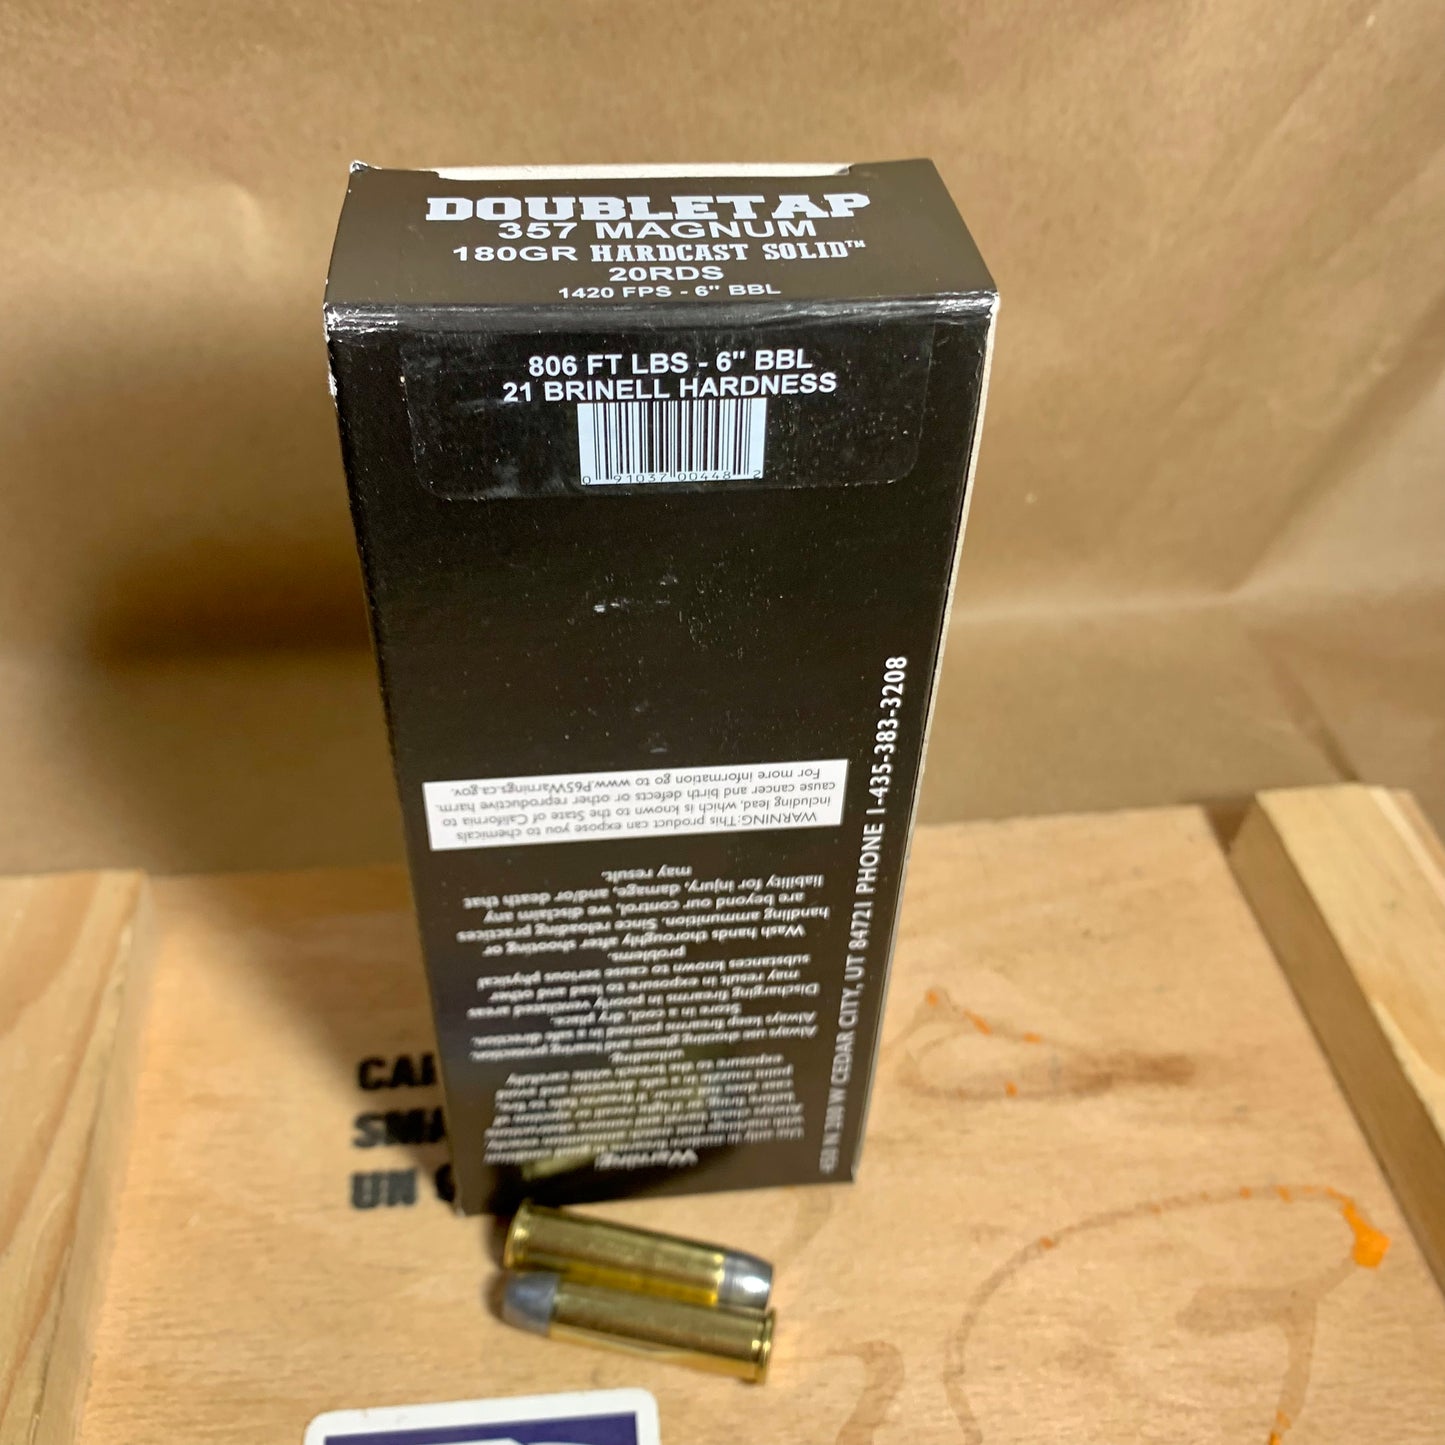 20 Round Box DoubleTap .357 Magnum Ammo 180gr Hardcast Solid - DT357180